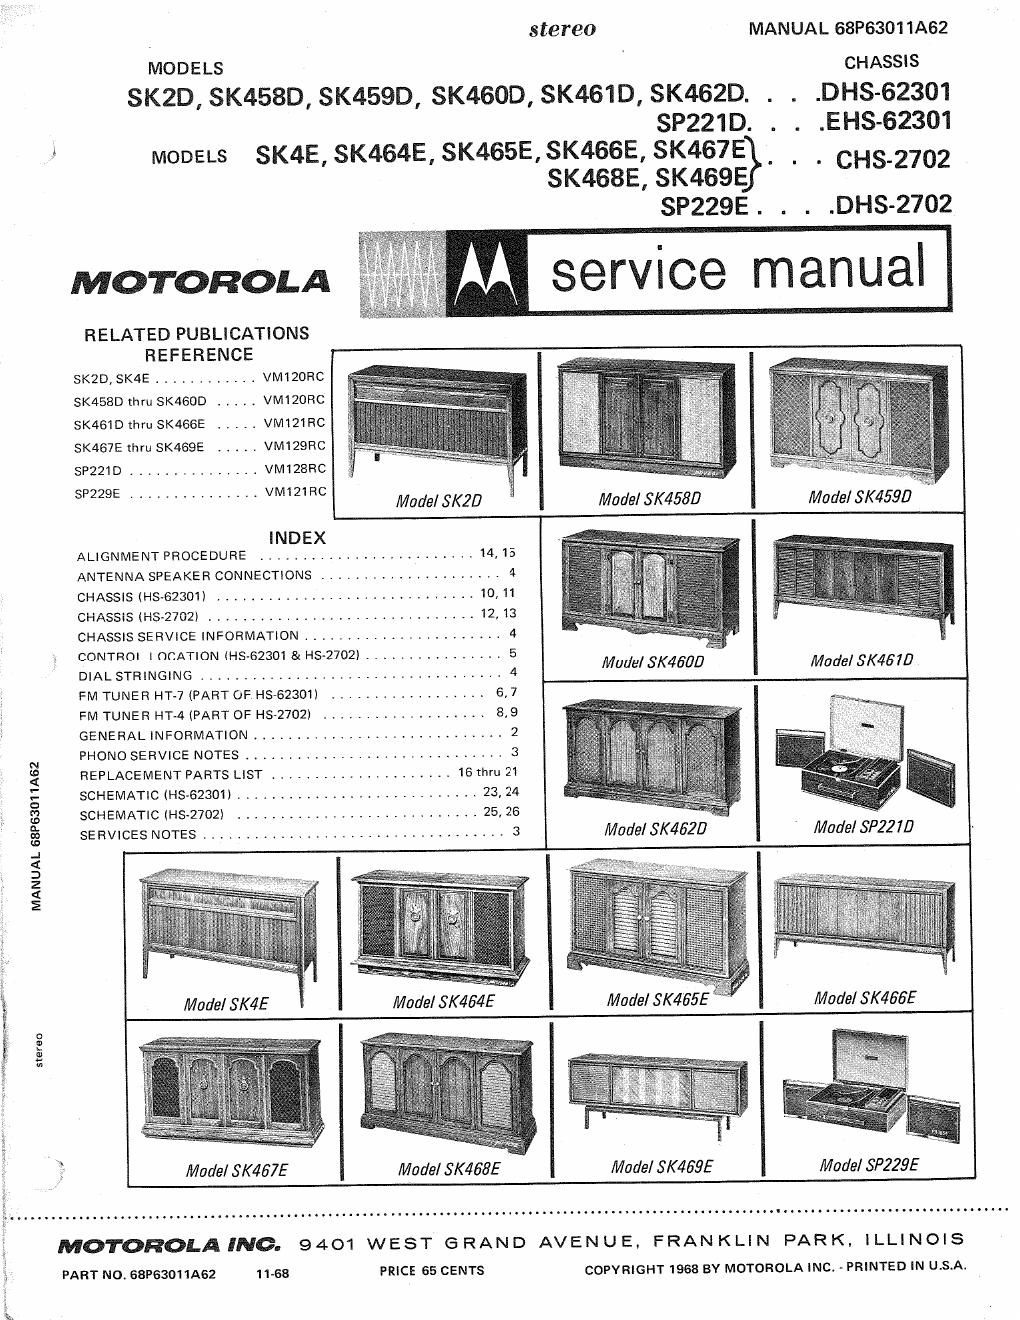 motorola sk 468 e service manual